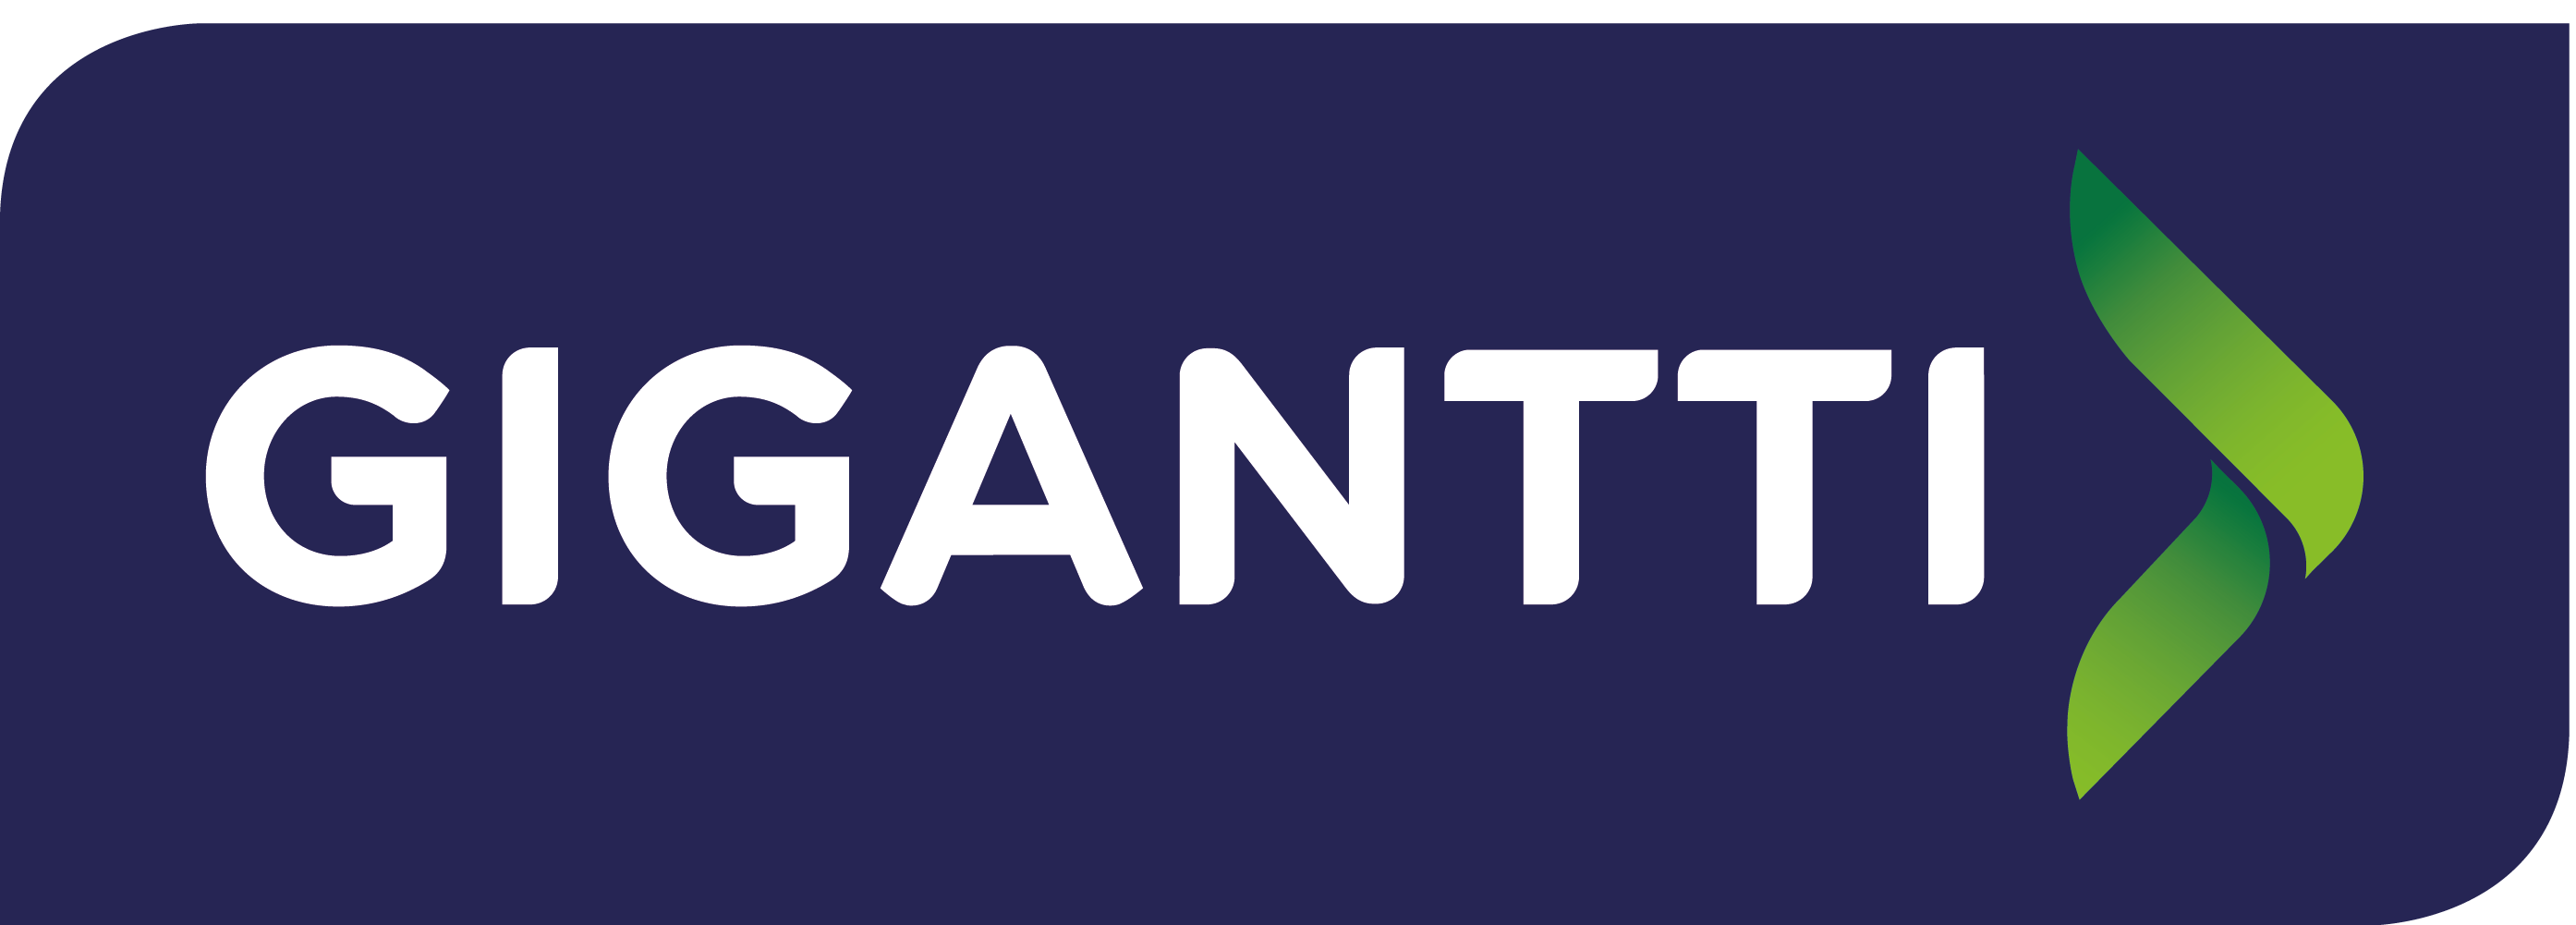 Gigantti_logo_bluebox